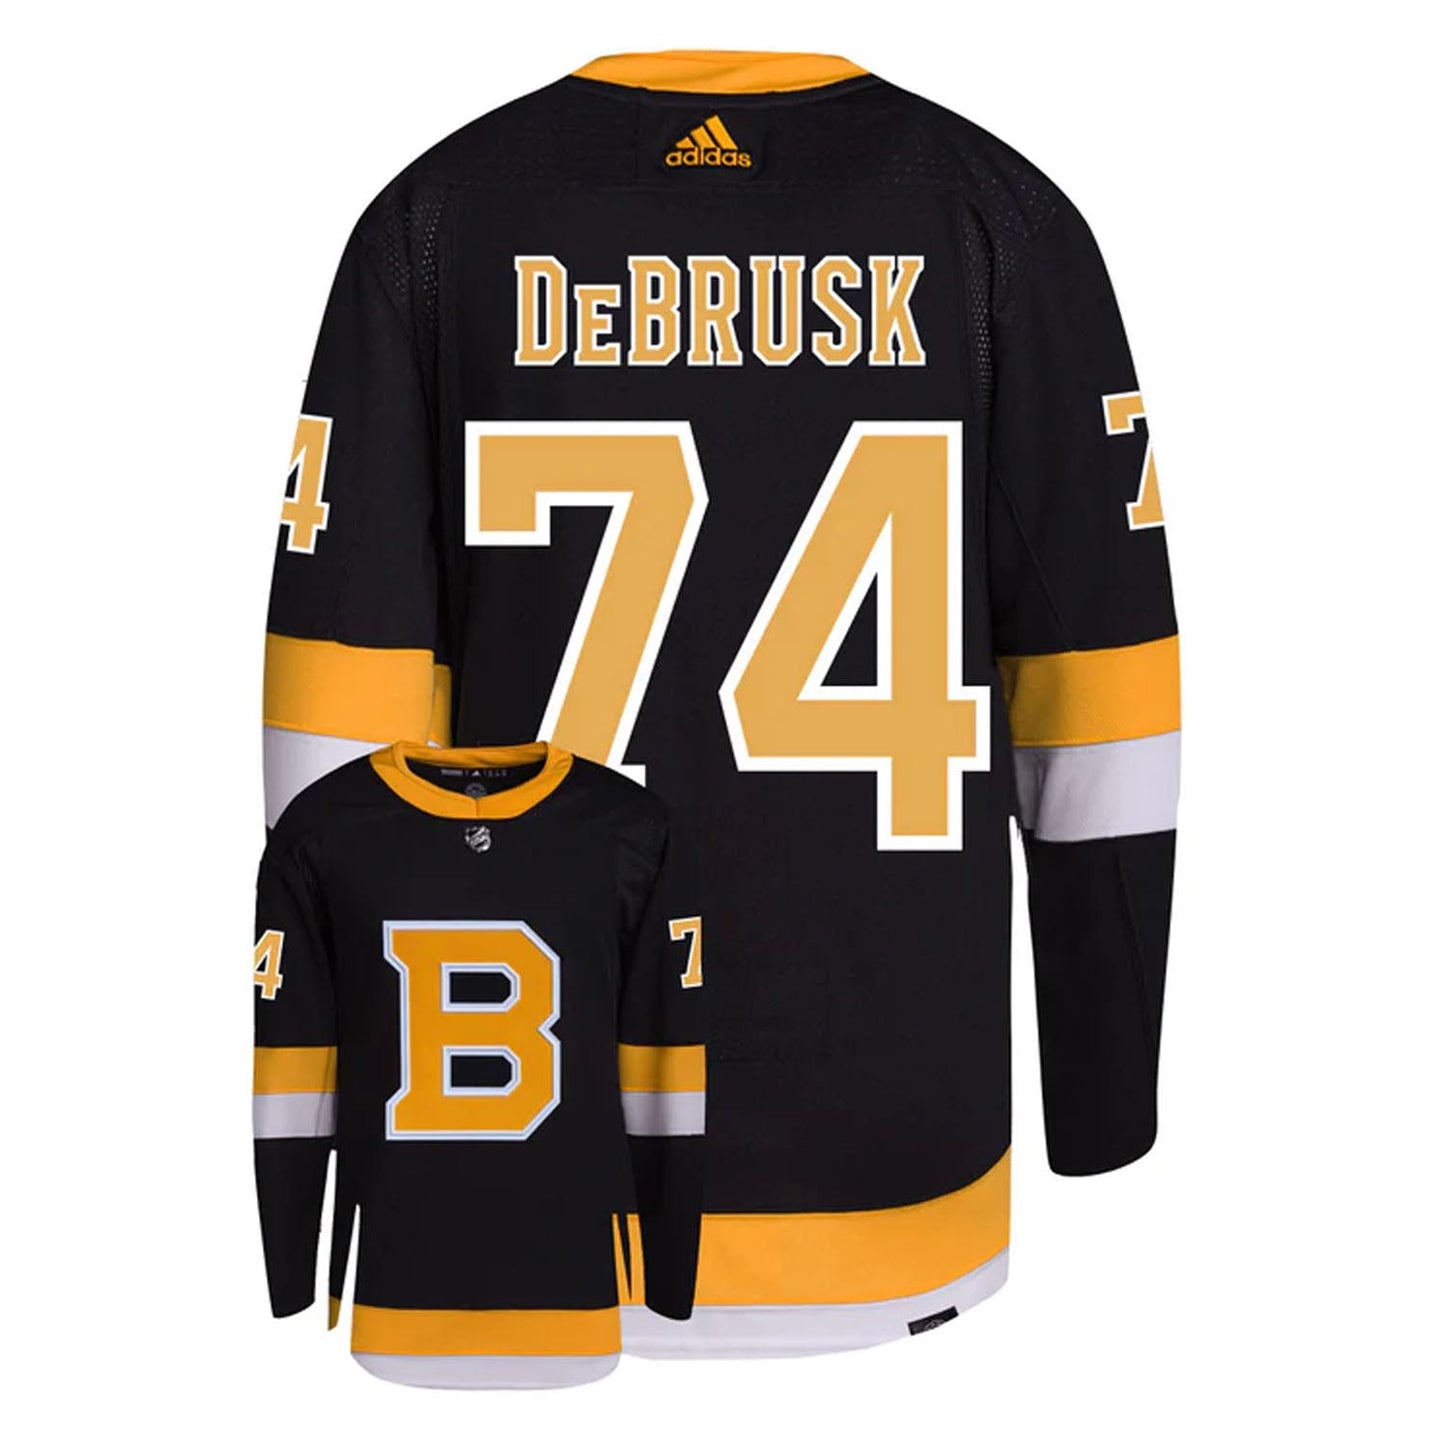 NHL Jake Debrusk Boston Bruins 74 Jersey